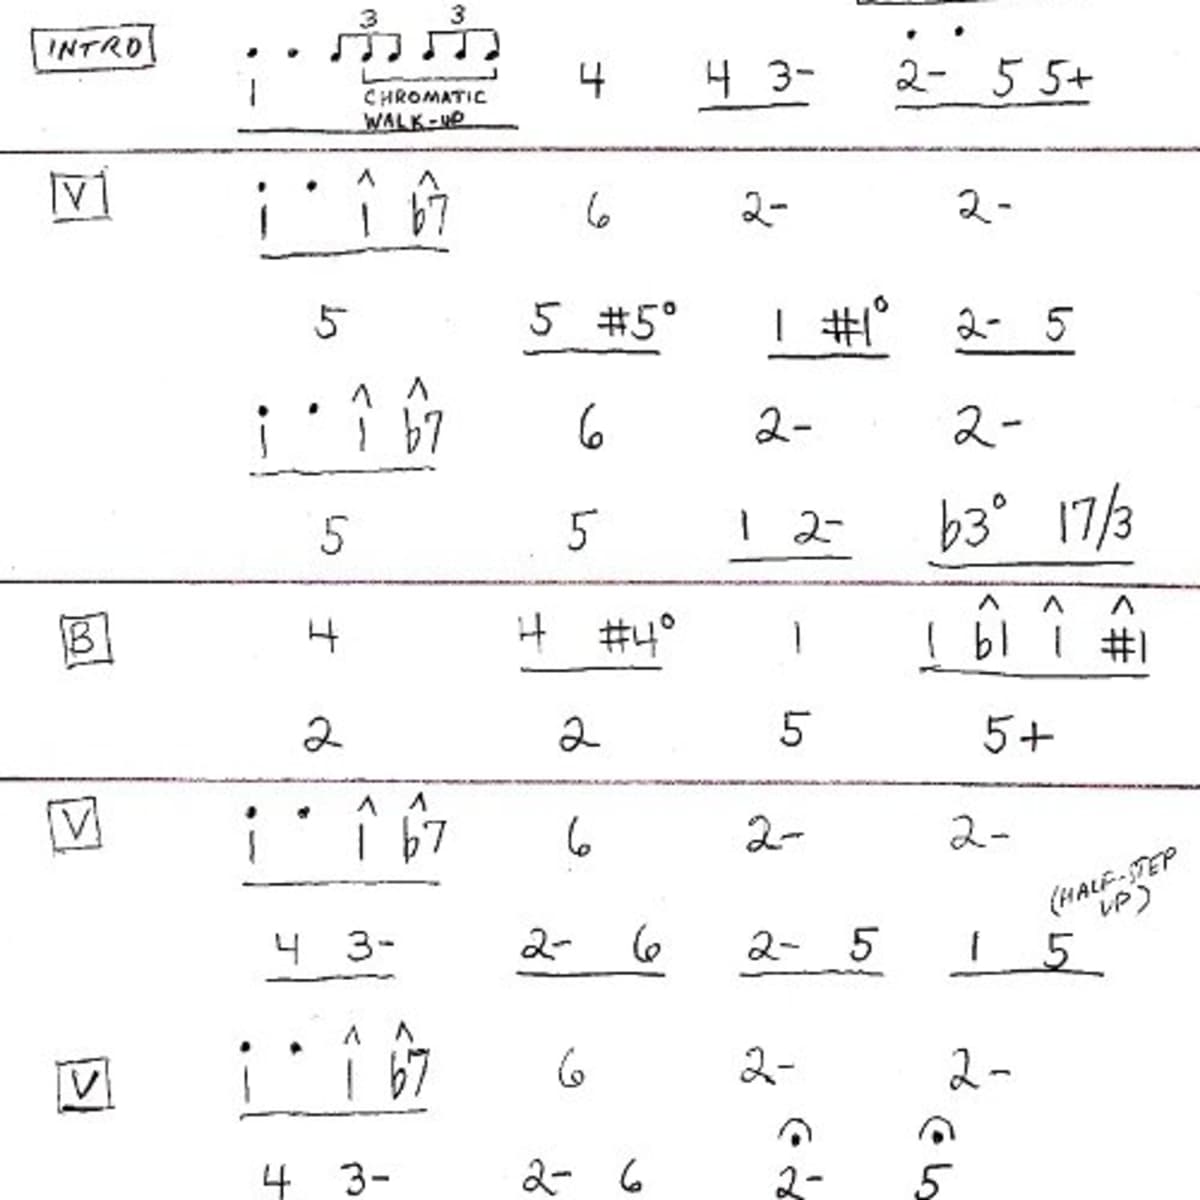 nashville number system chart for songs